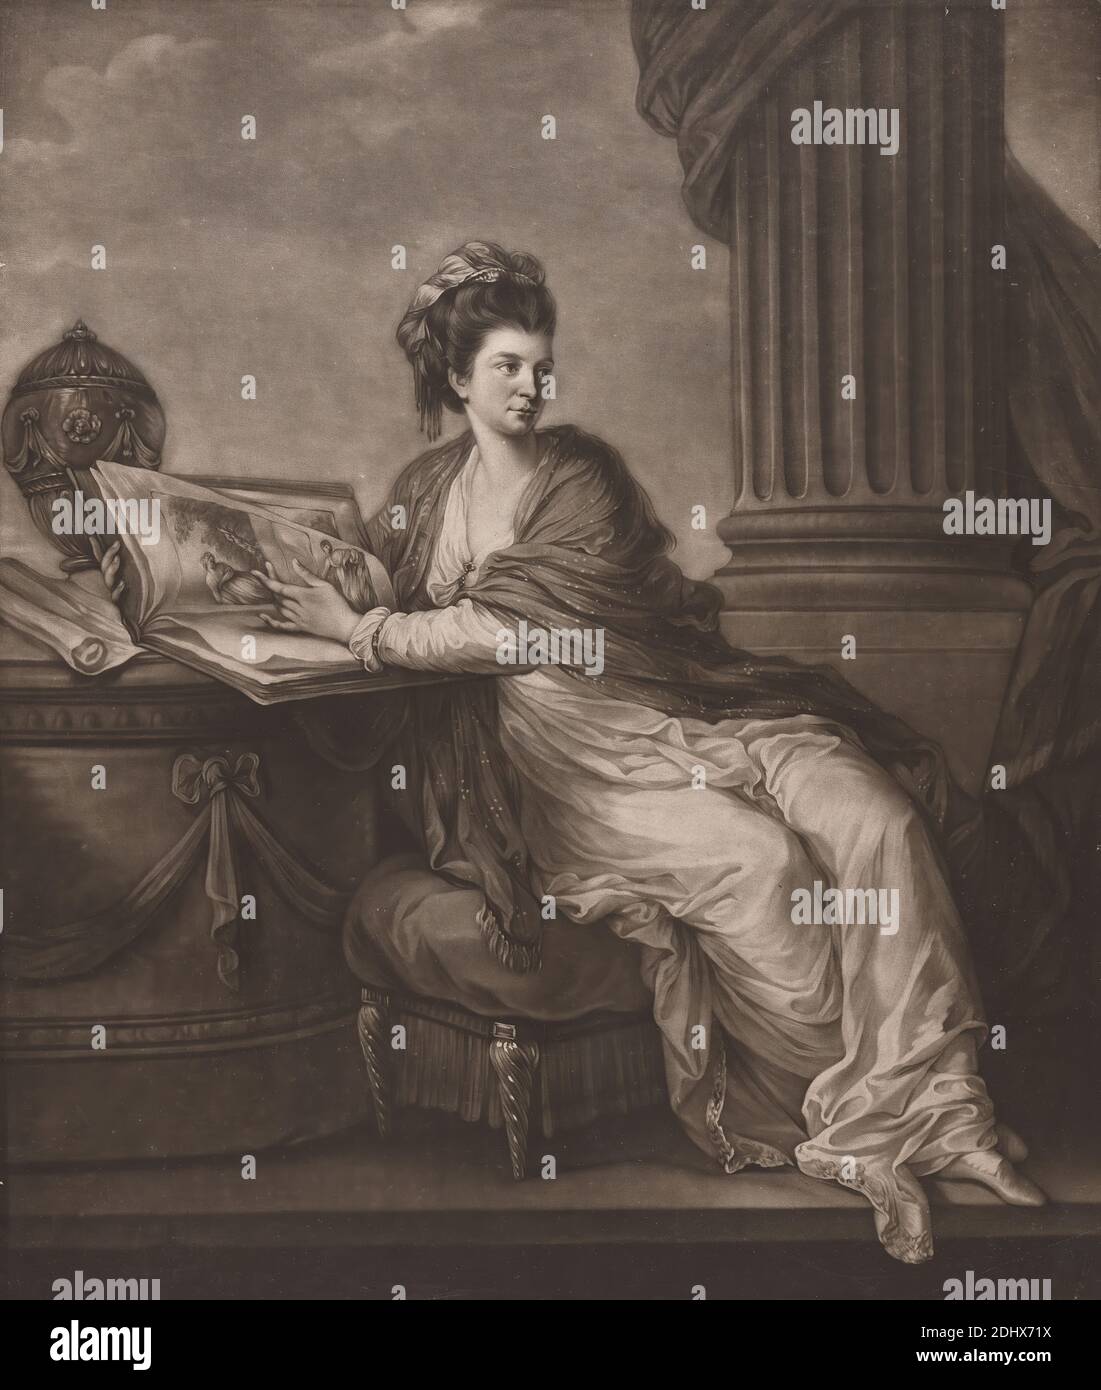 Signora, artista sconosciuto, XVIII secolo, non datato, Mezzotint Foto Stock